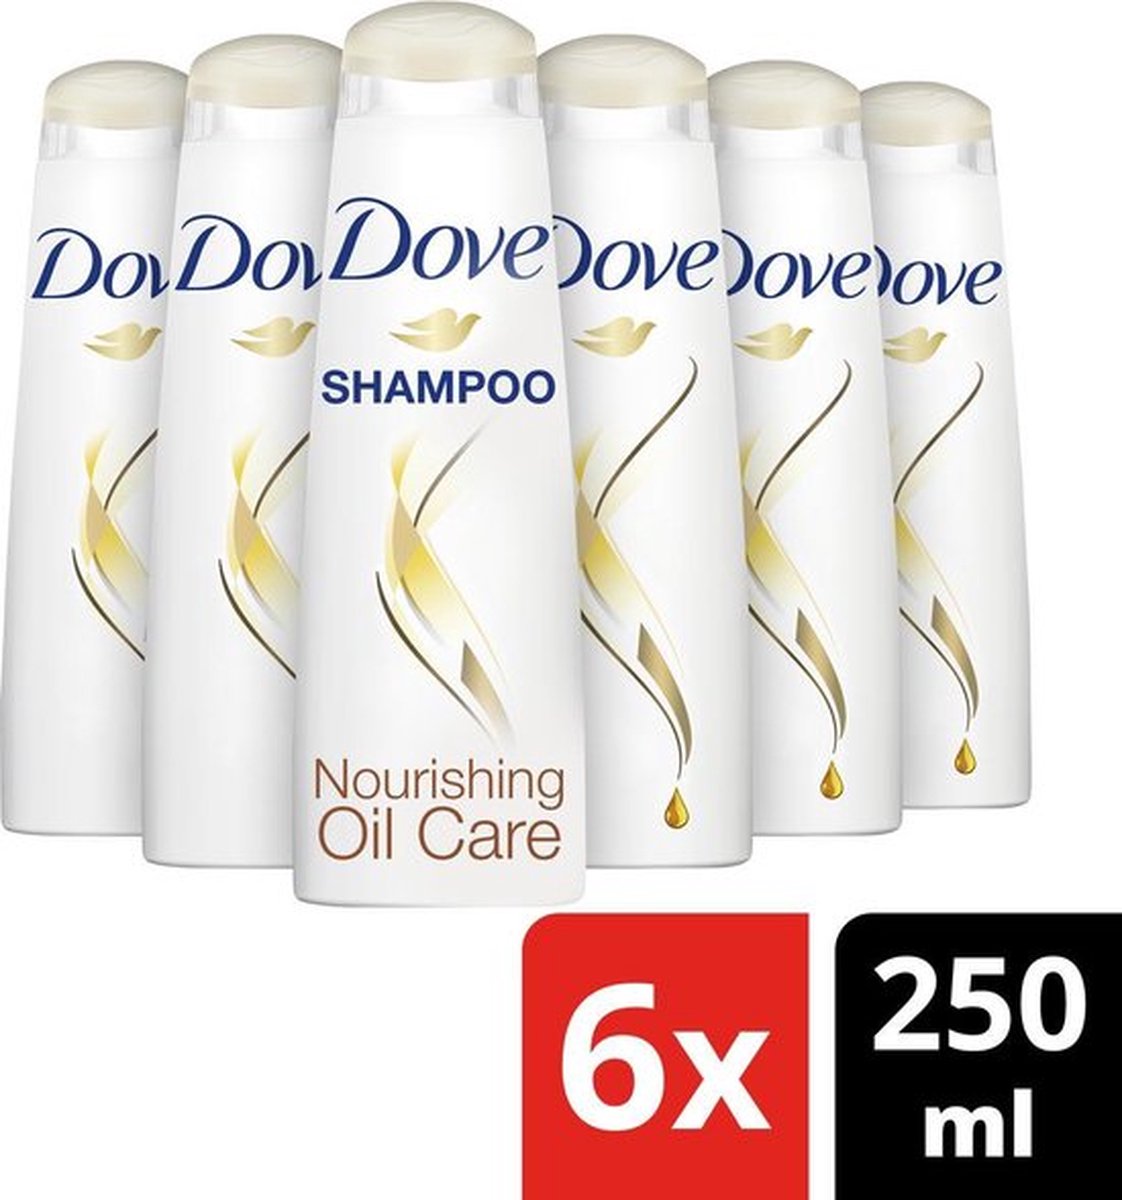 Dove Shampoo Nourishing Oil Care [6 x 250 ml]